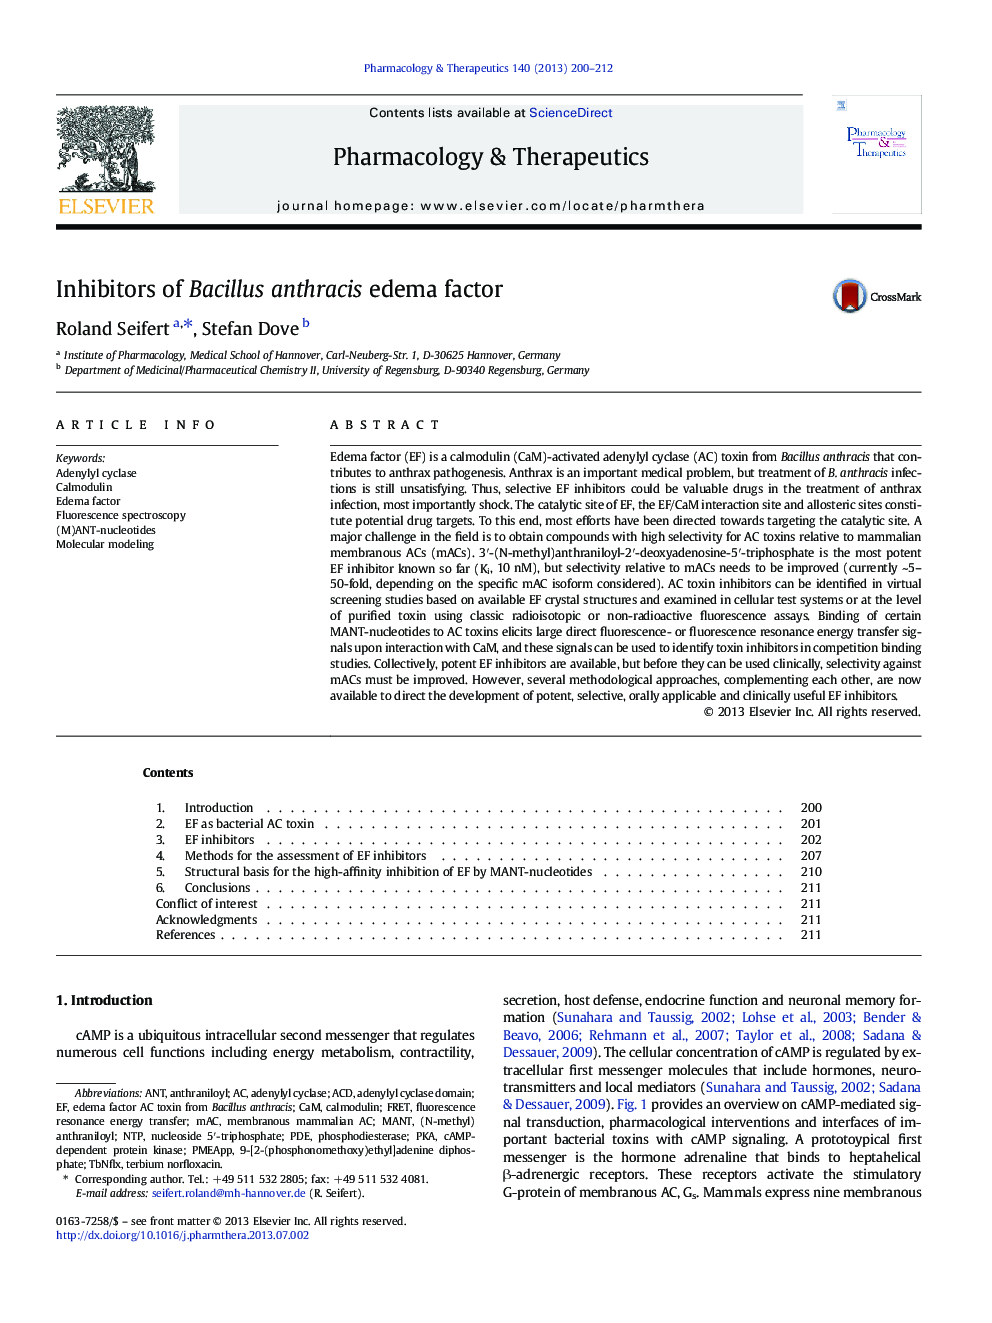 Inhibitors of Bacillus anthracis edema factor